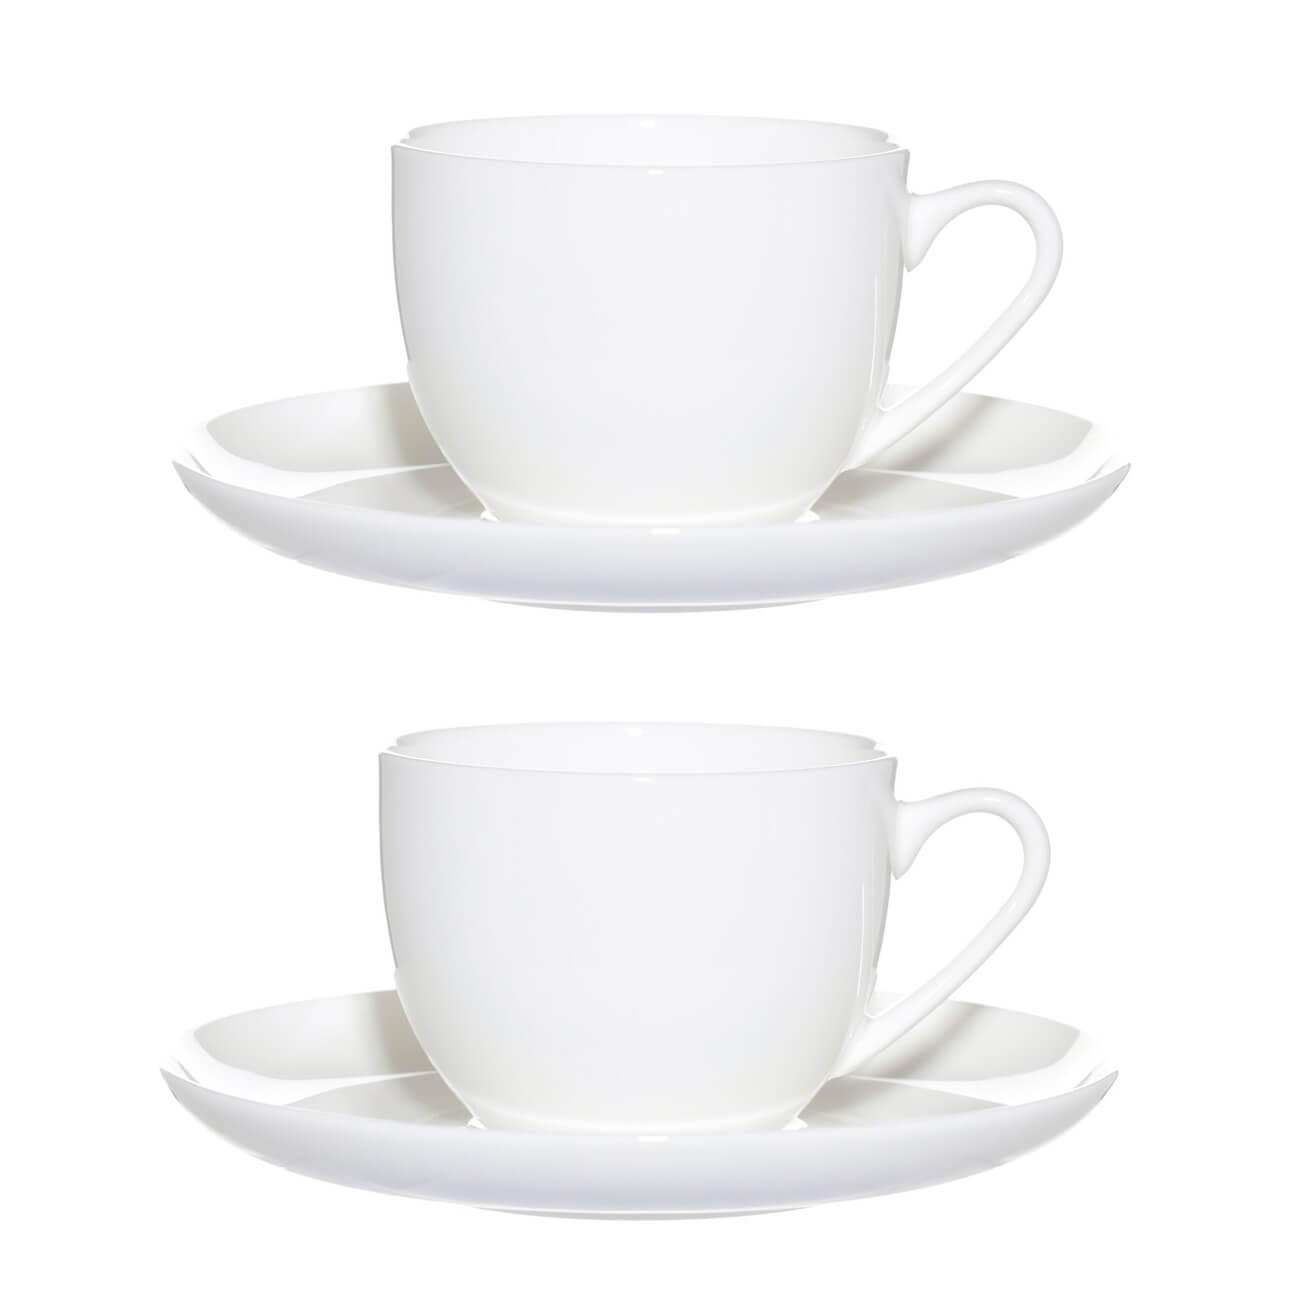 Пара чайная, 2 перс, 4 пр, 250 мл, фарфор F, белая, Ideal white ложка одноразовая 12 шт чайная мистерия 185140 107393 белая